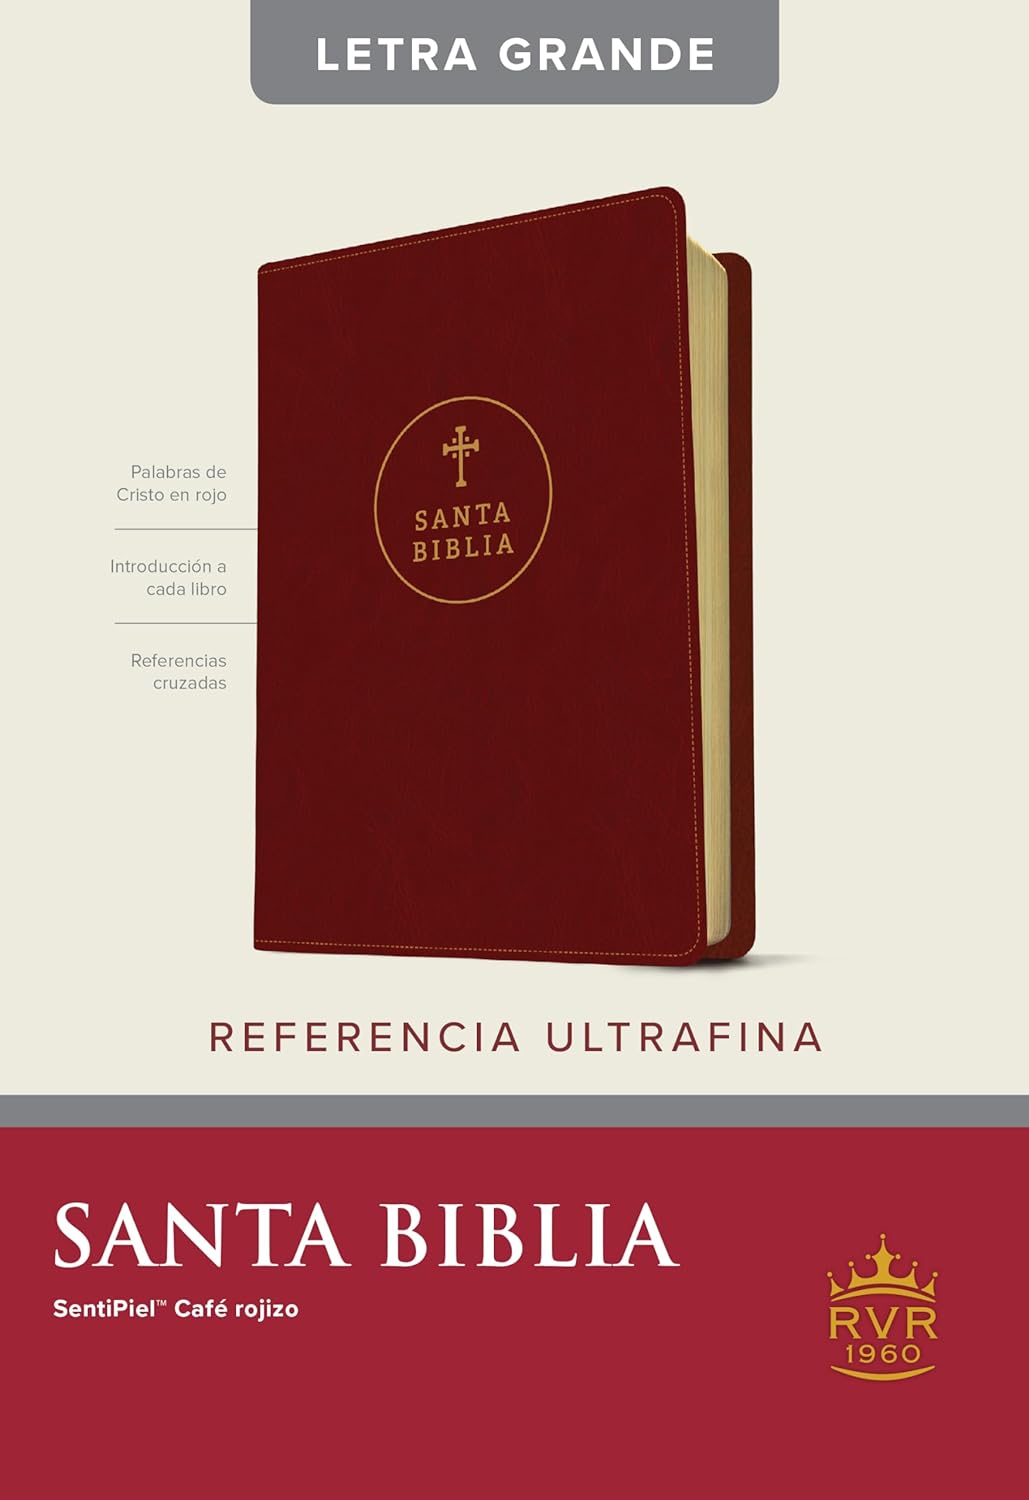 Santa Biblia RVR60, Edición de referencia ultrafina, letra grande, Café rojizo